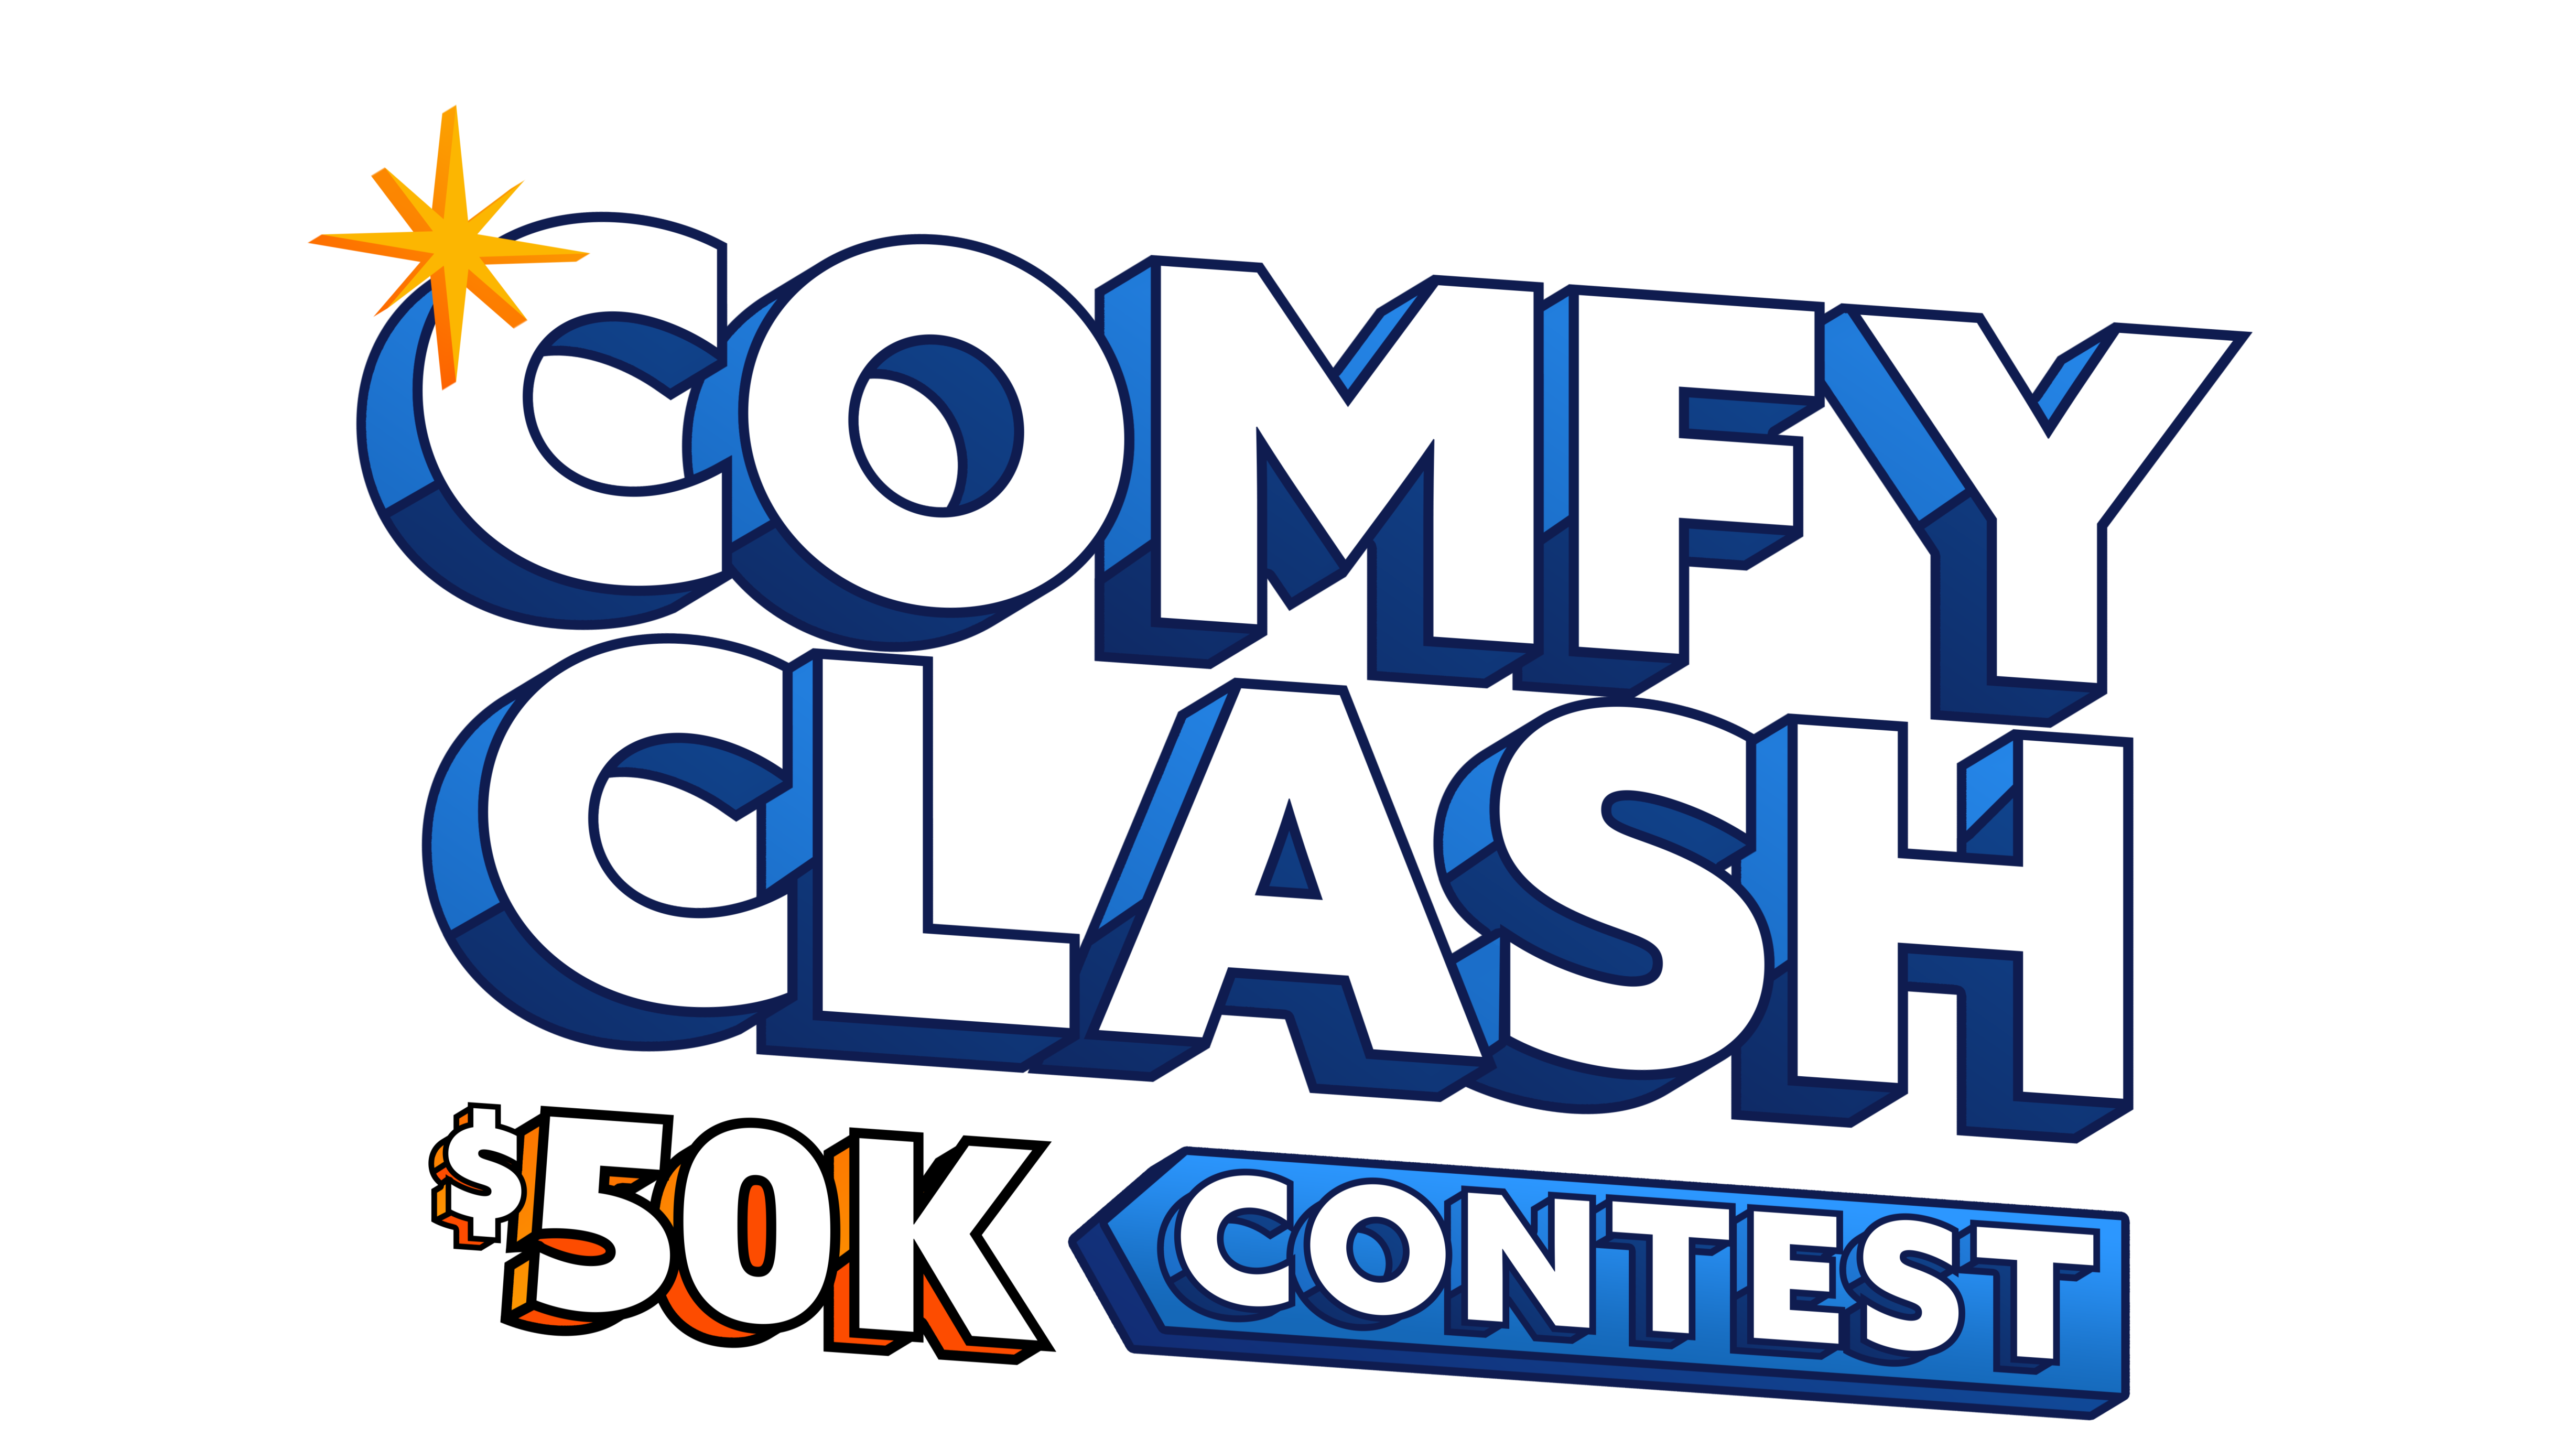 MRCOOL® Video Challenge logo